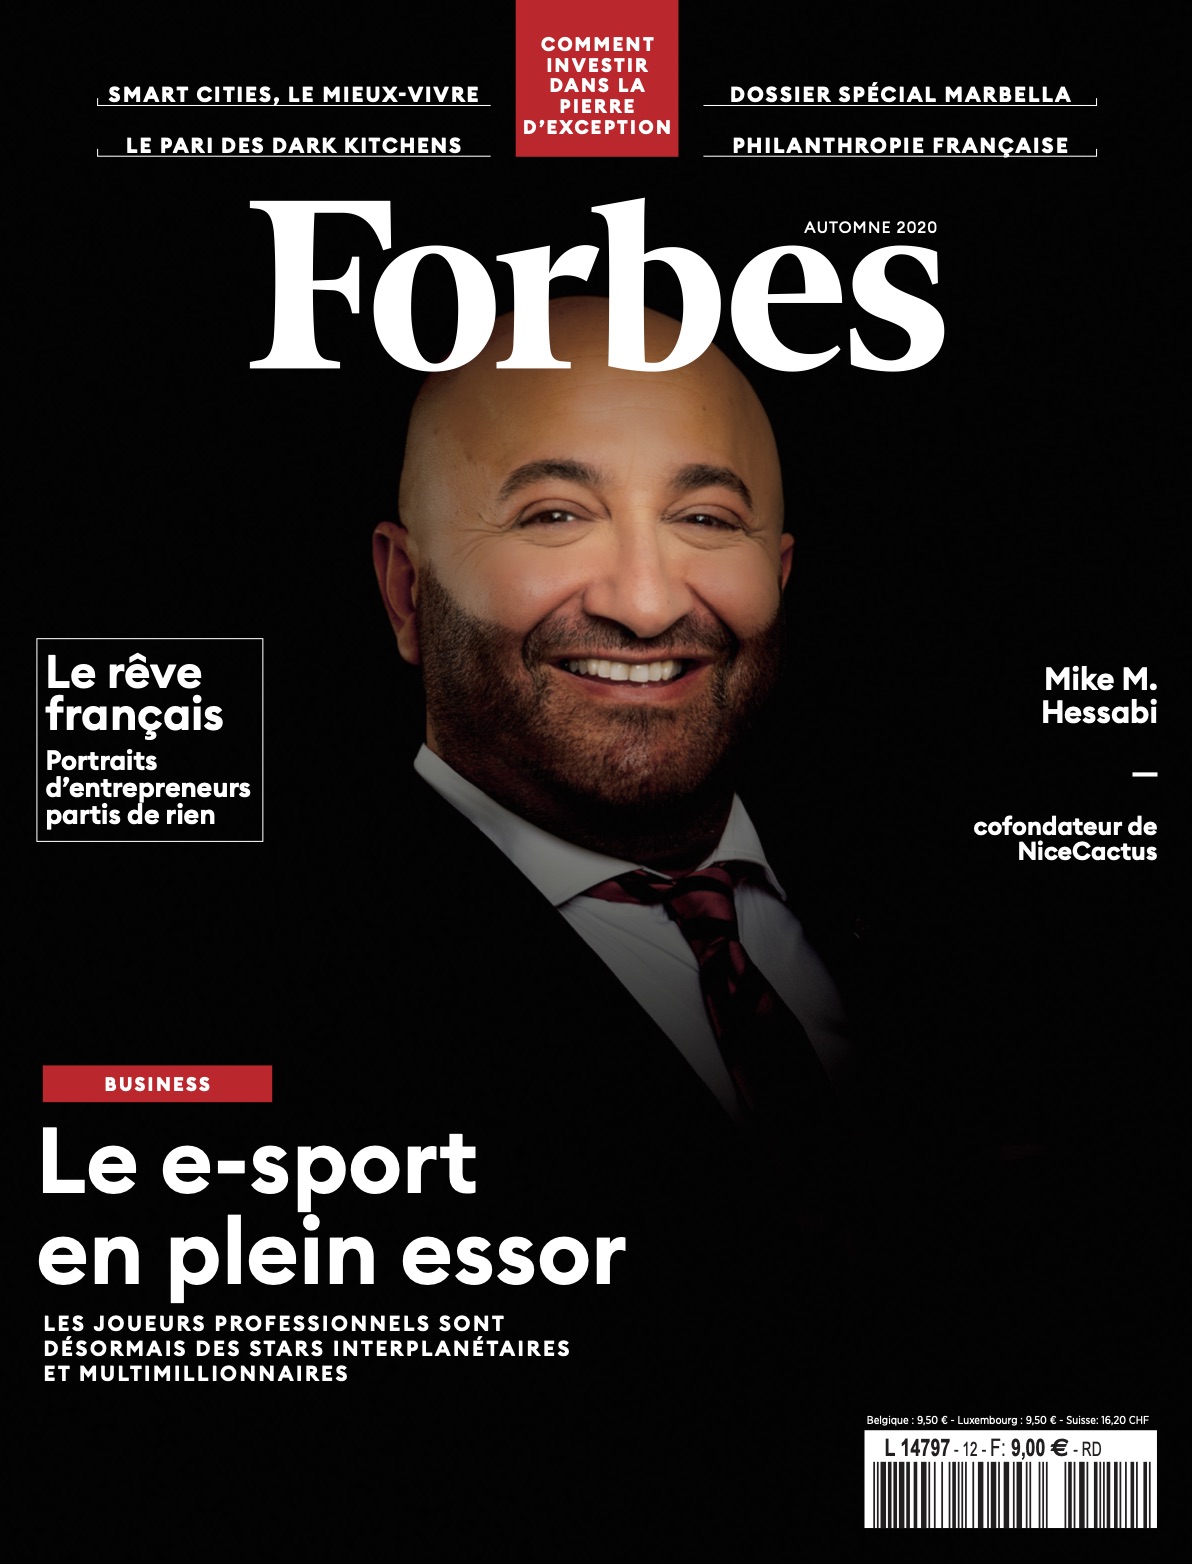 Forbes France on X: A VOS KIOSQUES ! Le nouveau Forbes magazine